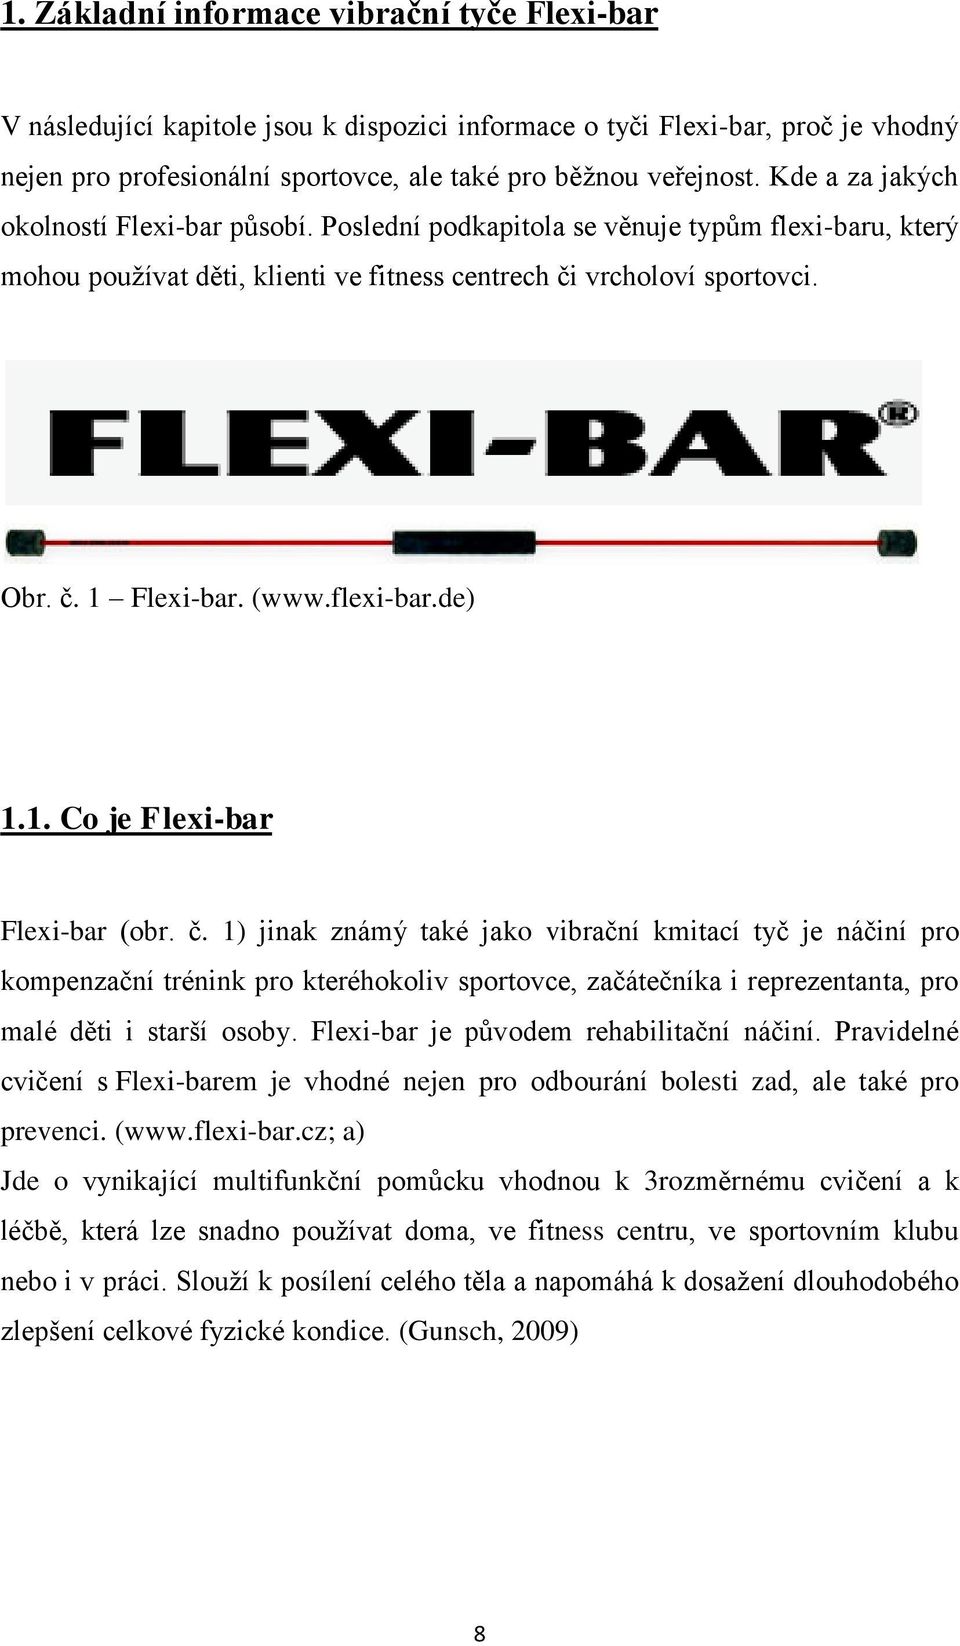 flexi-bar.de) 1.1. Co je Flexi-bar Flexi-bar (obr. č.